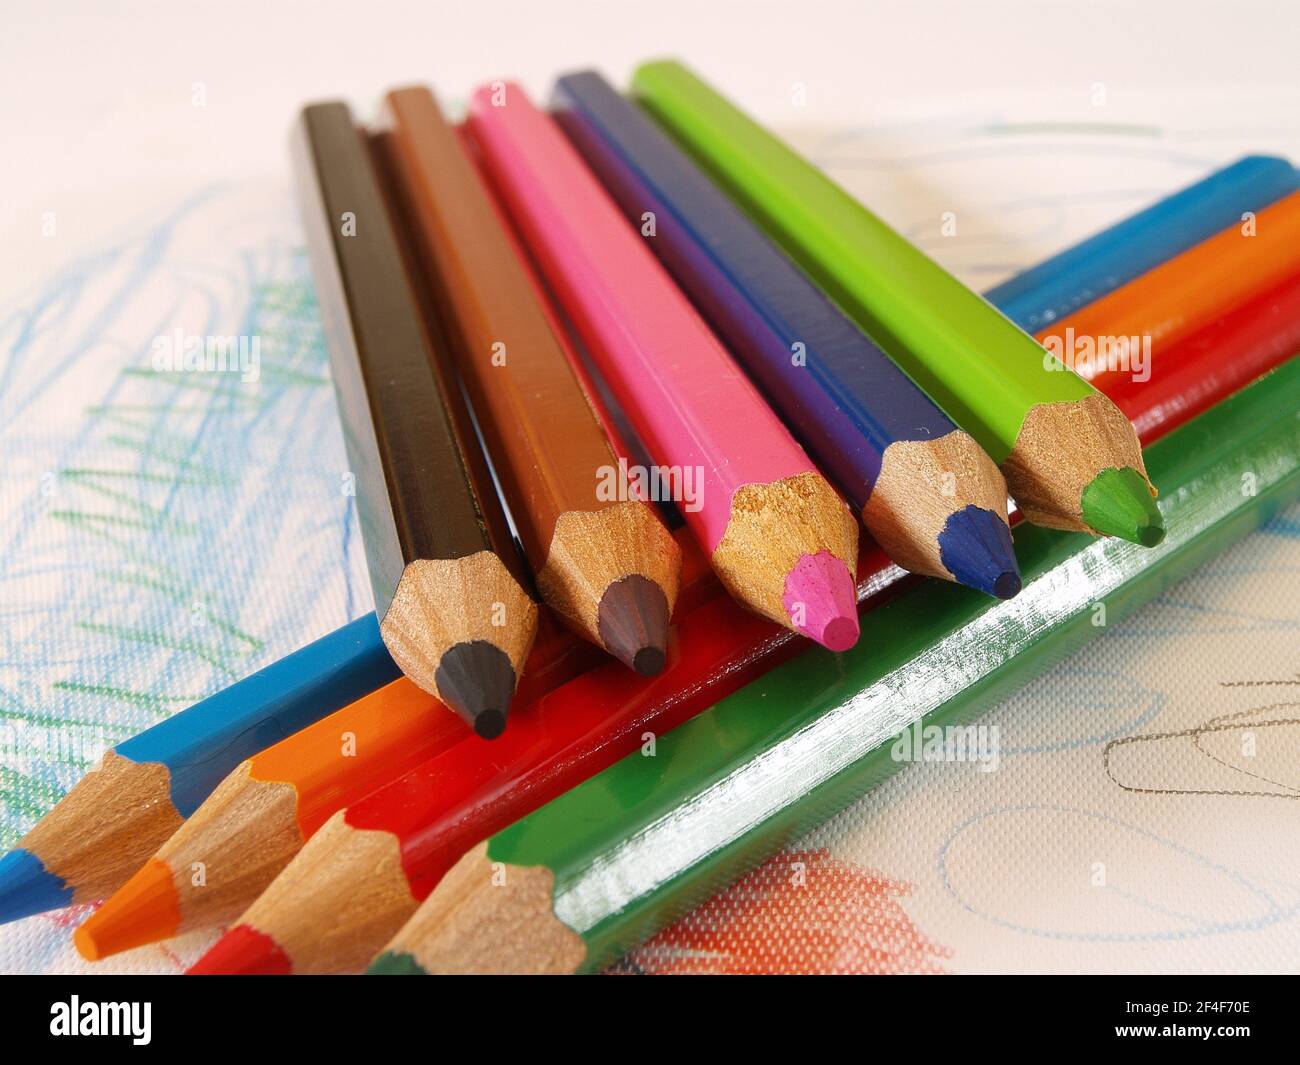 Mal so richtig kreativ sein und mit Buntstiften tolle Bilder malen. - Be really creative and draw great pictures with colored pencils. Stock Photo